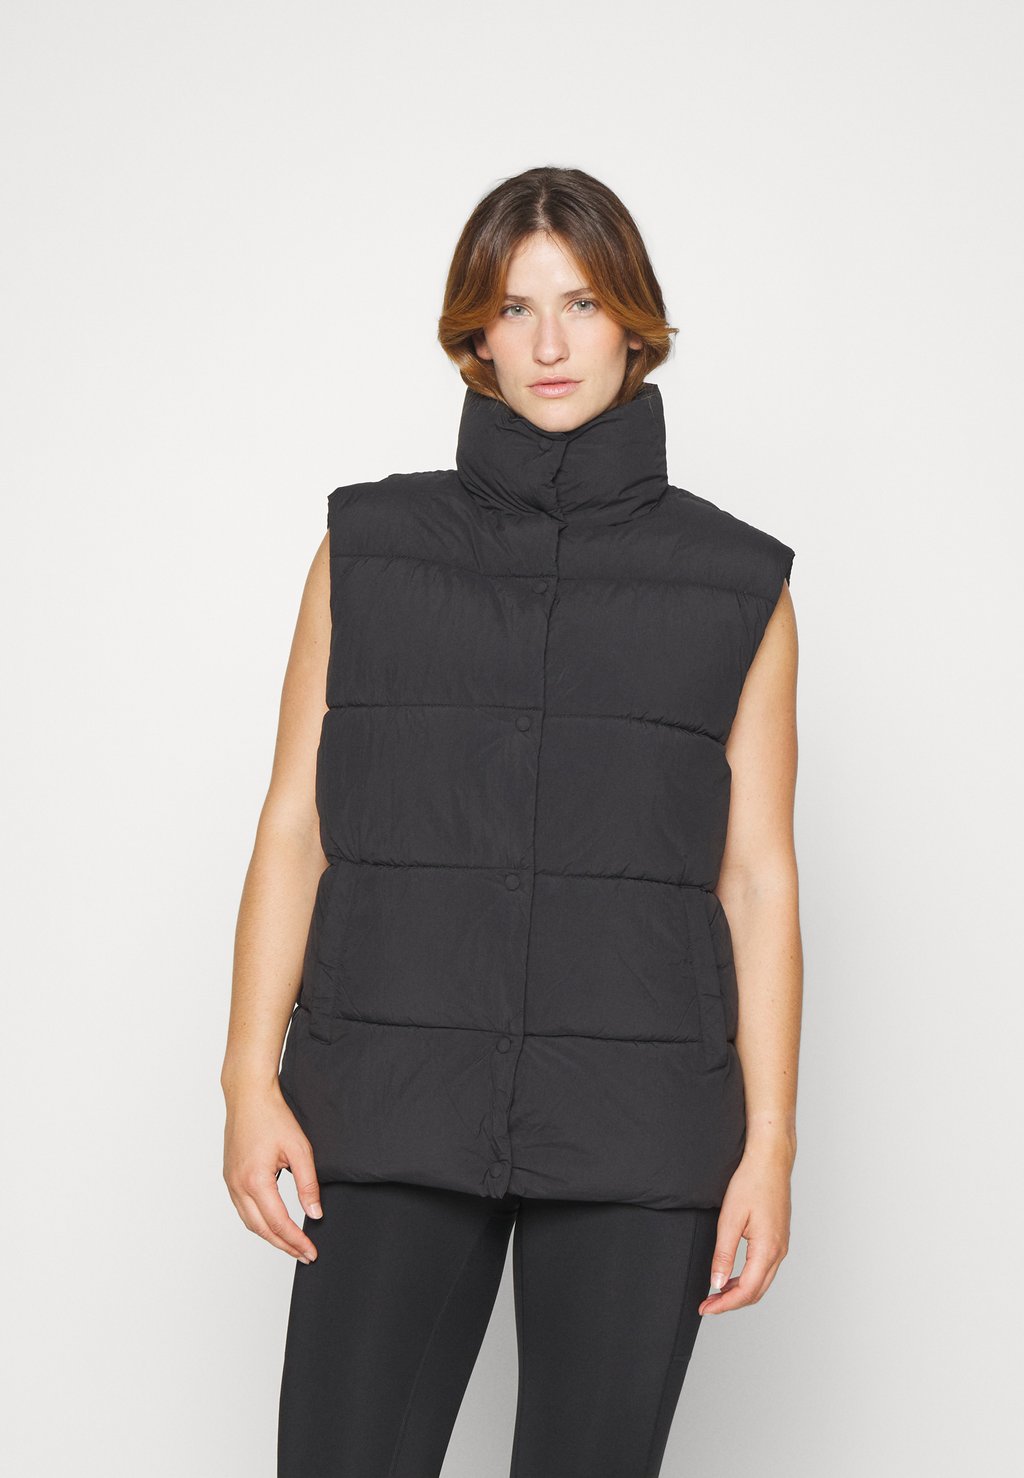 Жилет Mother Puffer Vest Cotton On Body, черный жилет cropped puffer vest cotton on body цвет black